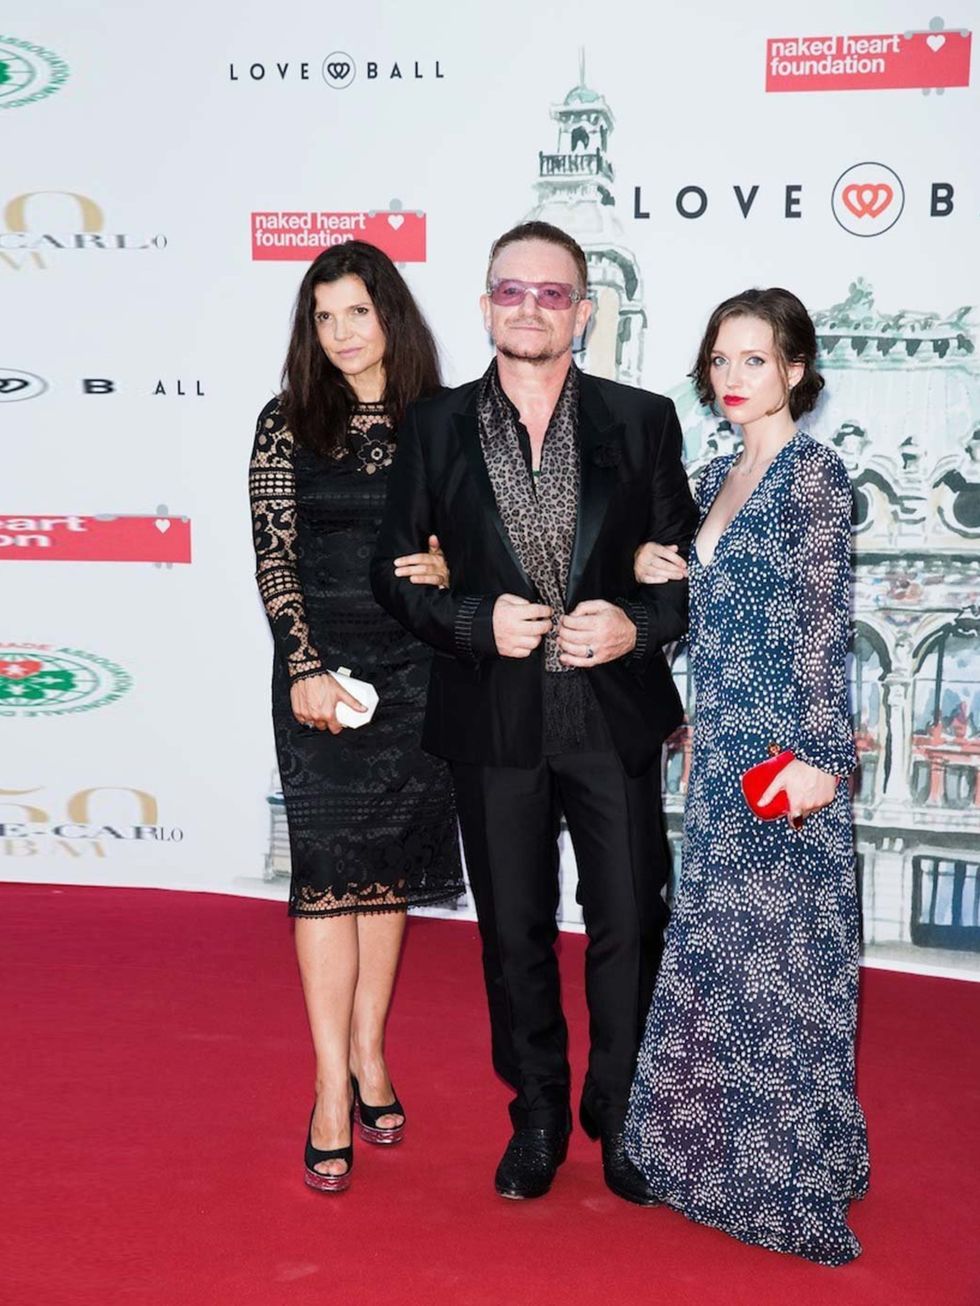 <p>Bono with his fashion designer wife Ali Hewson and their daughter, Hewson Jordan.</p><p><em><a href="http://www.elleuk.com/star-style/red-carpet/novak-djokovic-foundation-gala-dinner-2013">The Novak Djokovic Foundation Gala</a></em></p><p><em><a href="